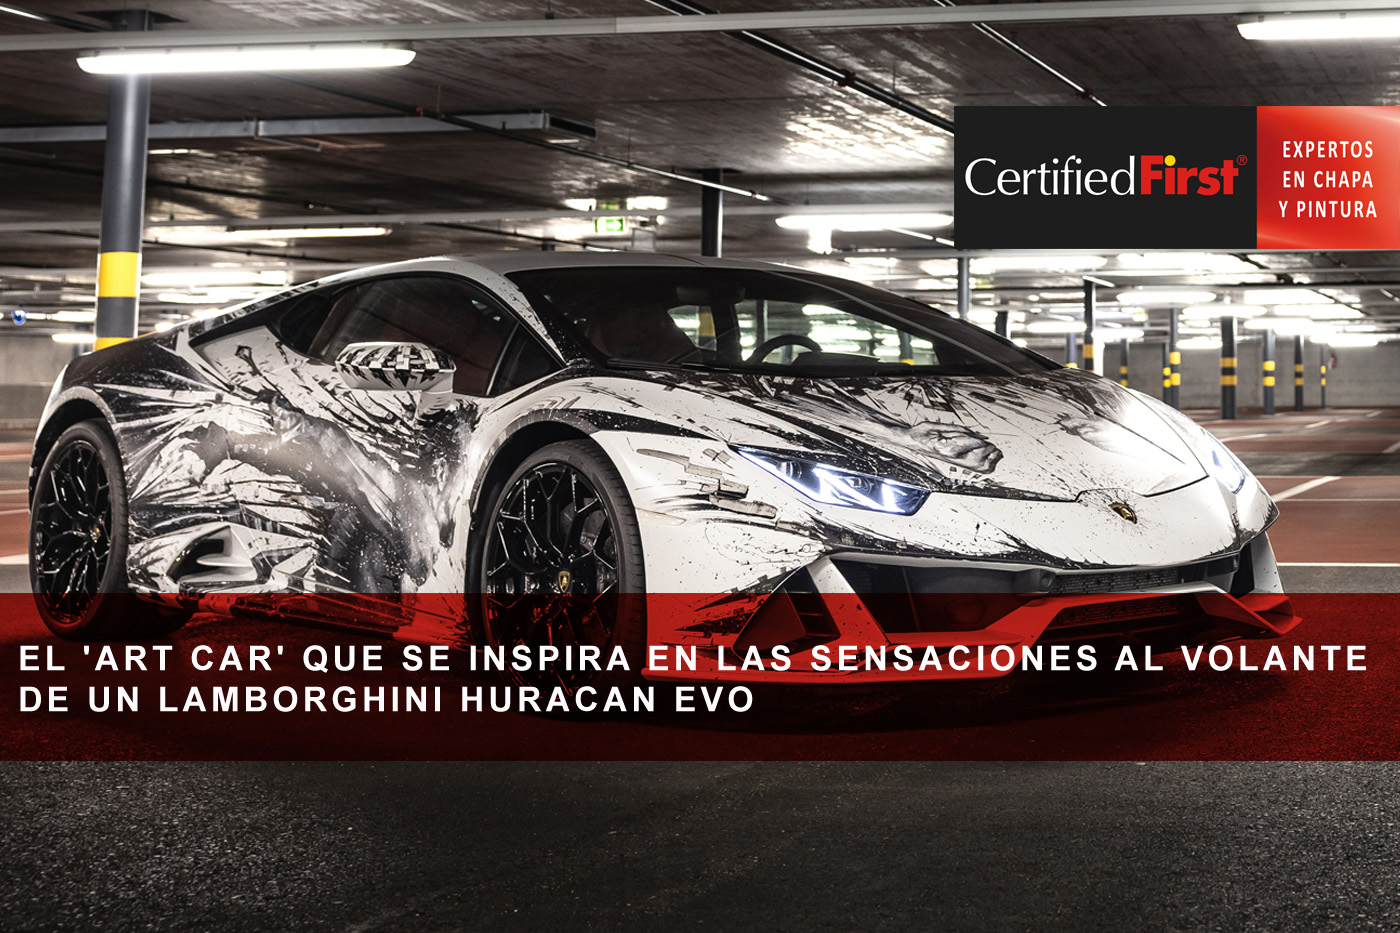 El 'art car' que se inspira en las sensaciones al volante de un Lamborghini Huracan Evo